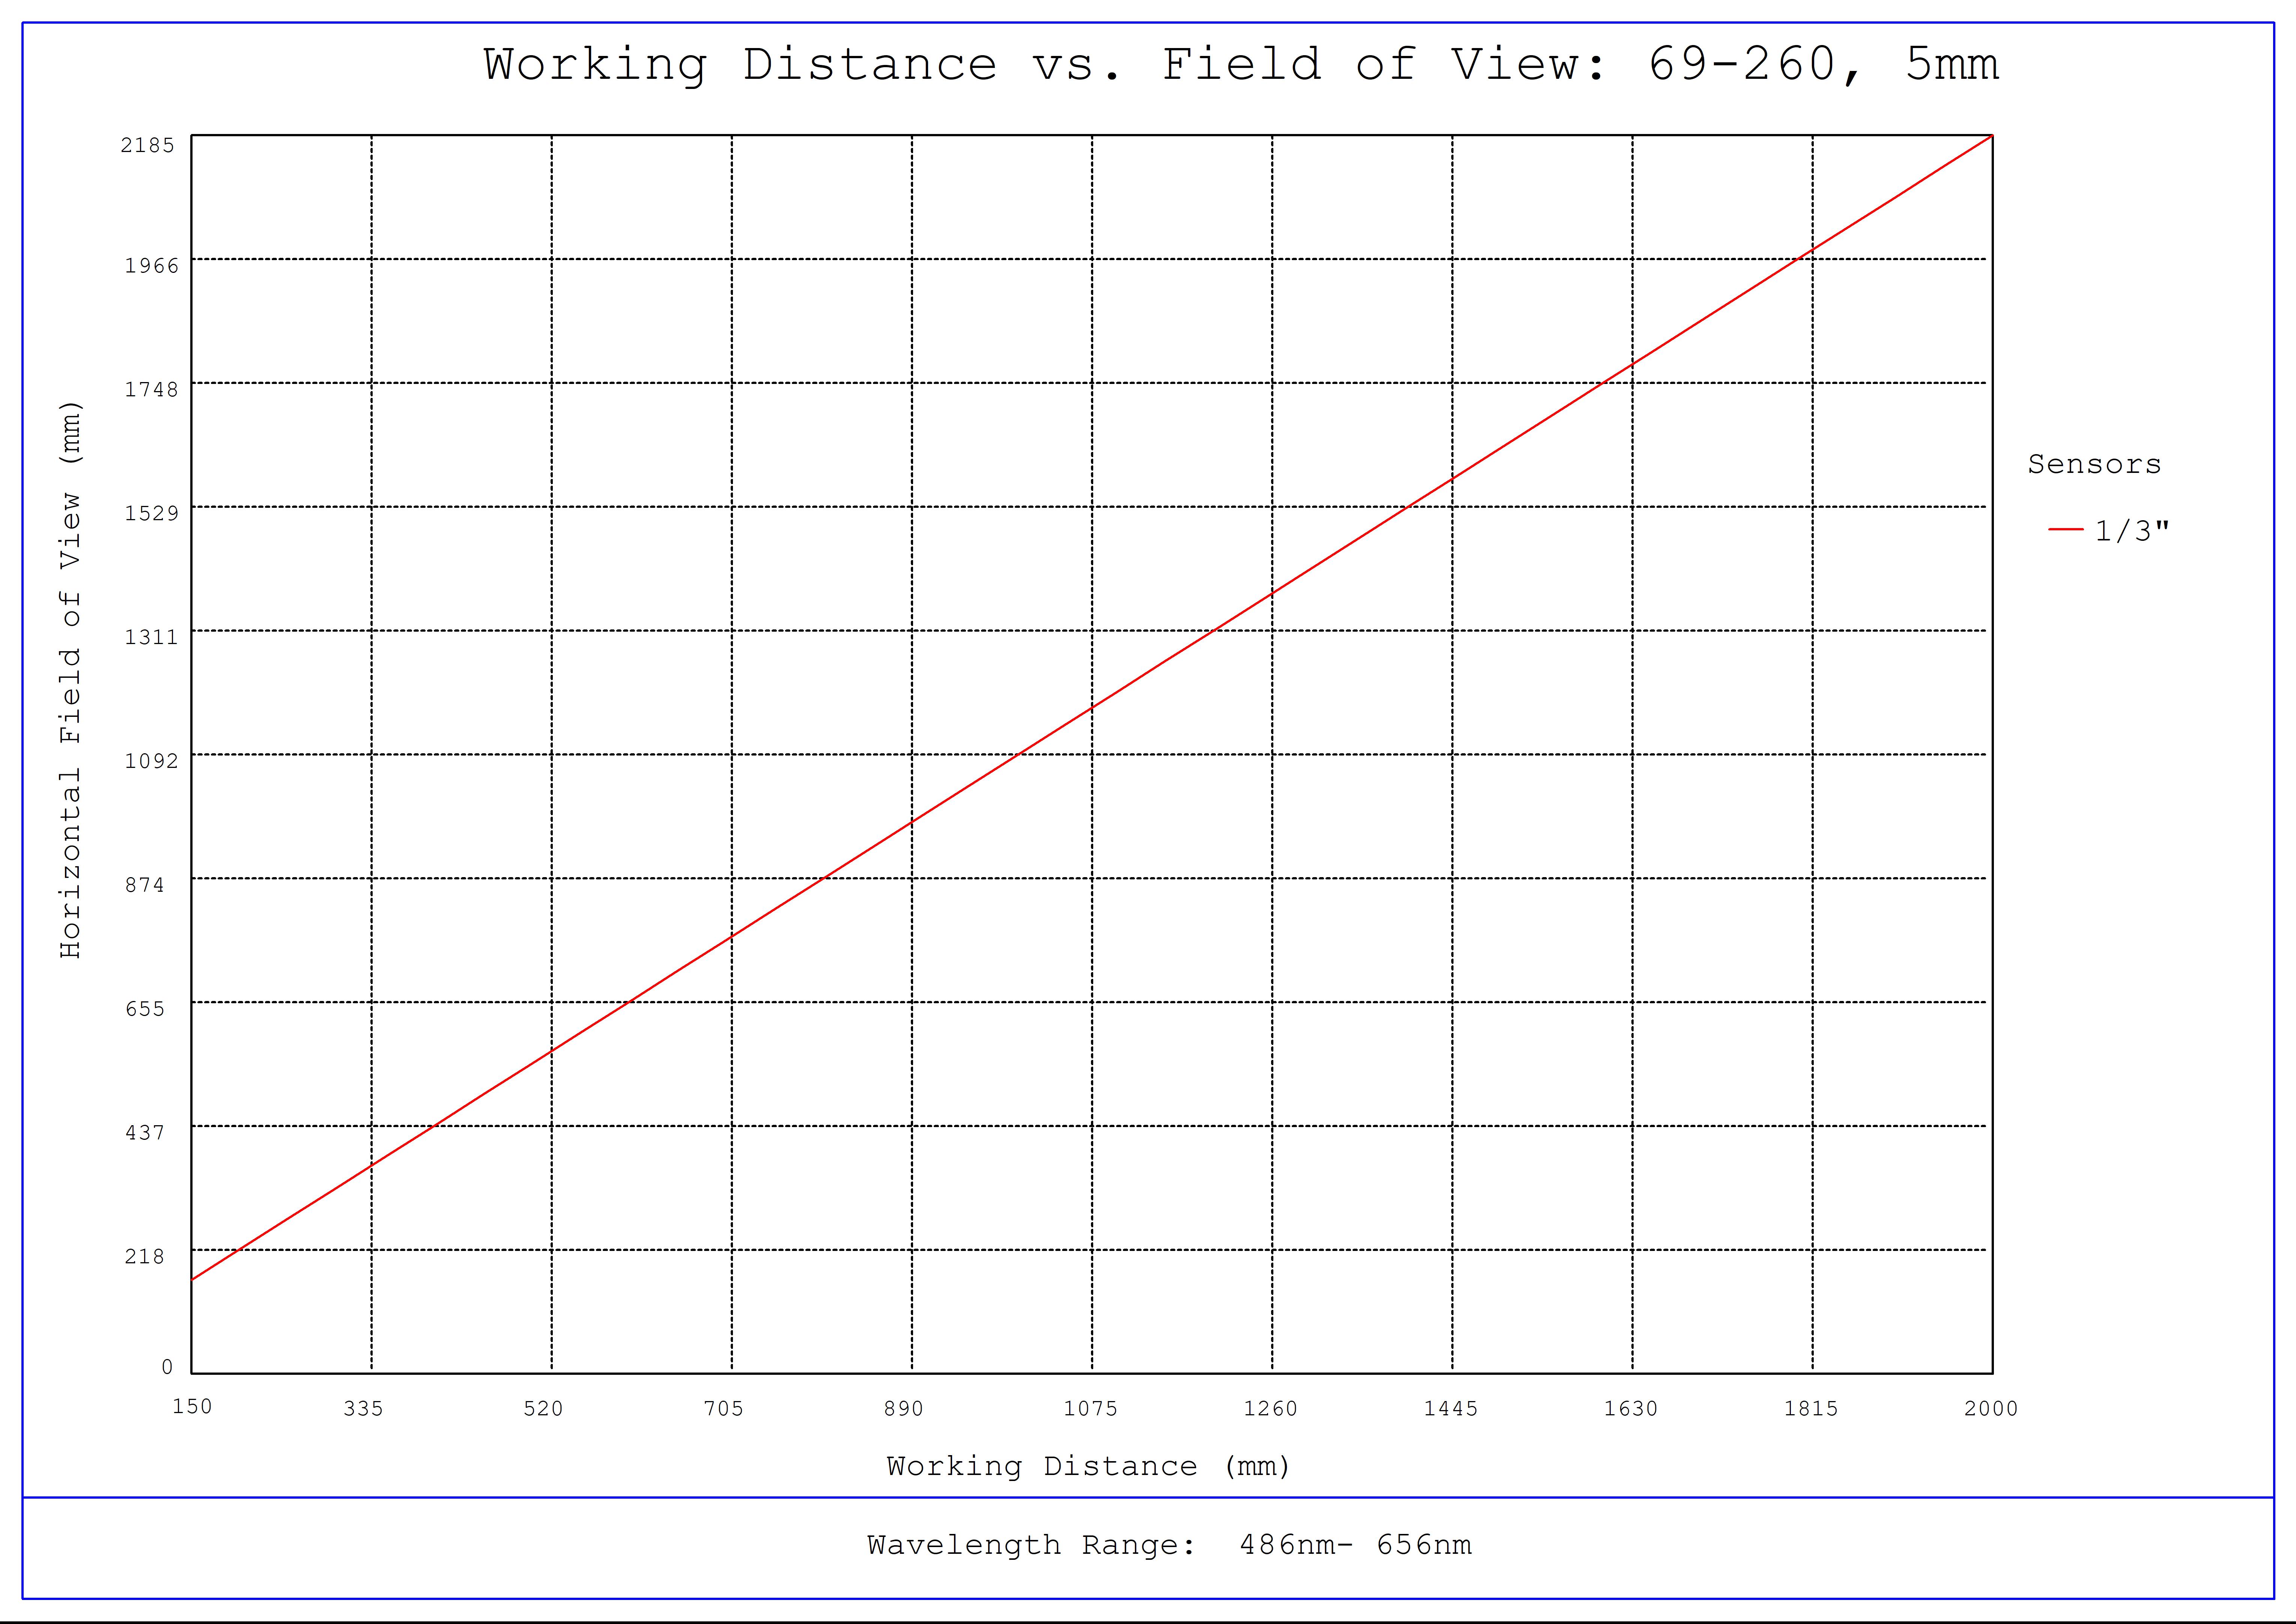 #69-260, 5mm FL f/4, Blue Series M12 Lens, Working Distance versus Field of View Plot